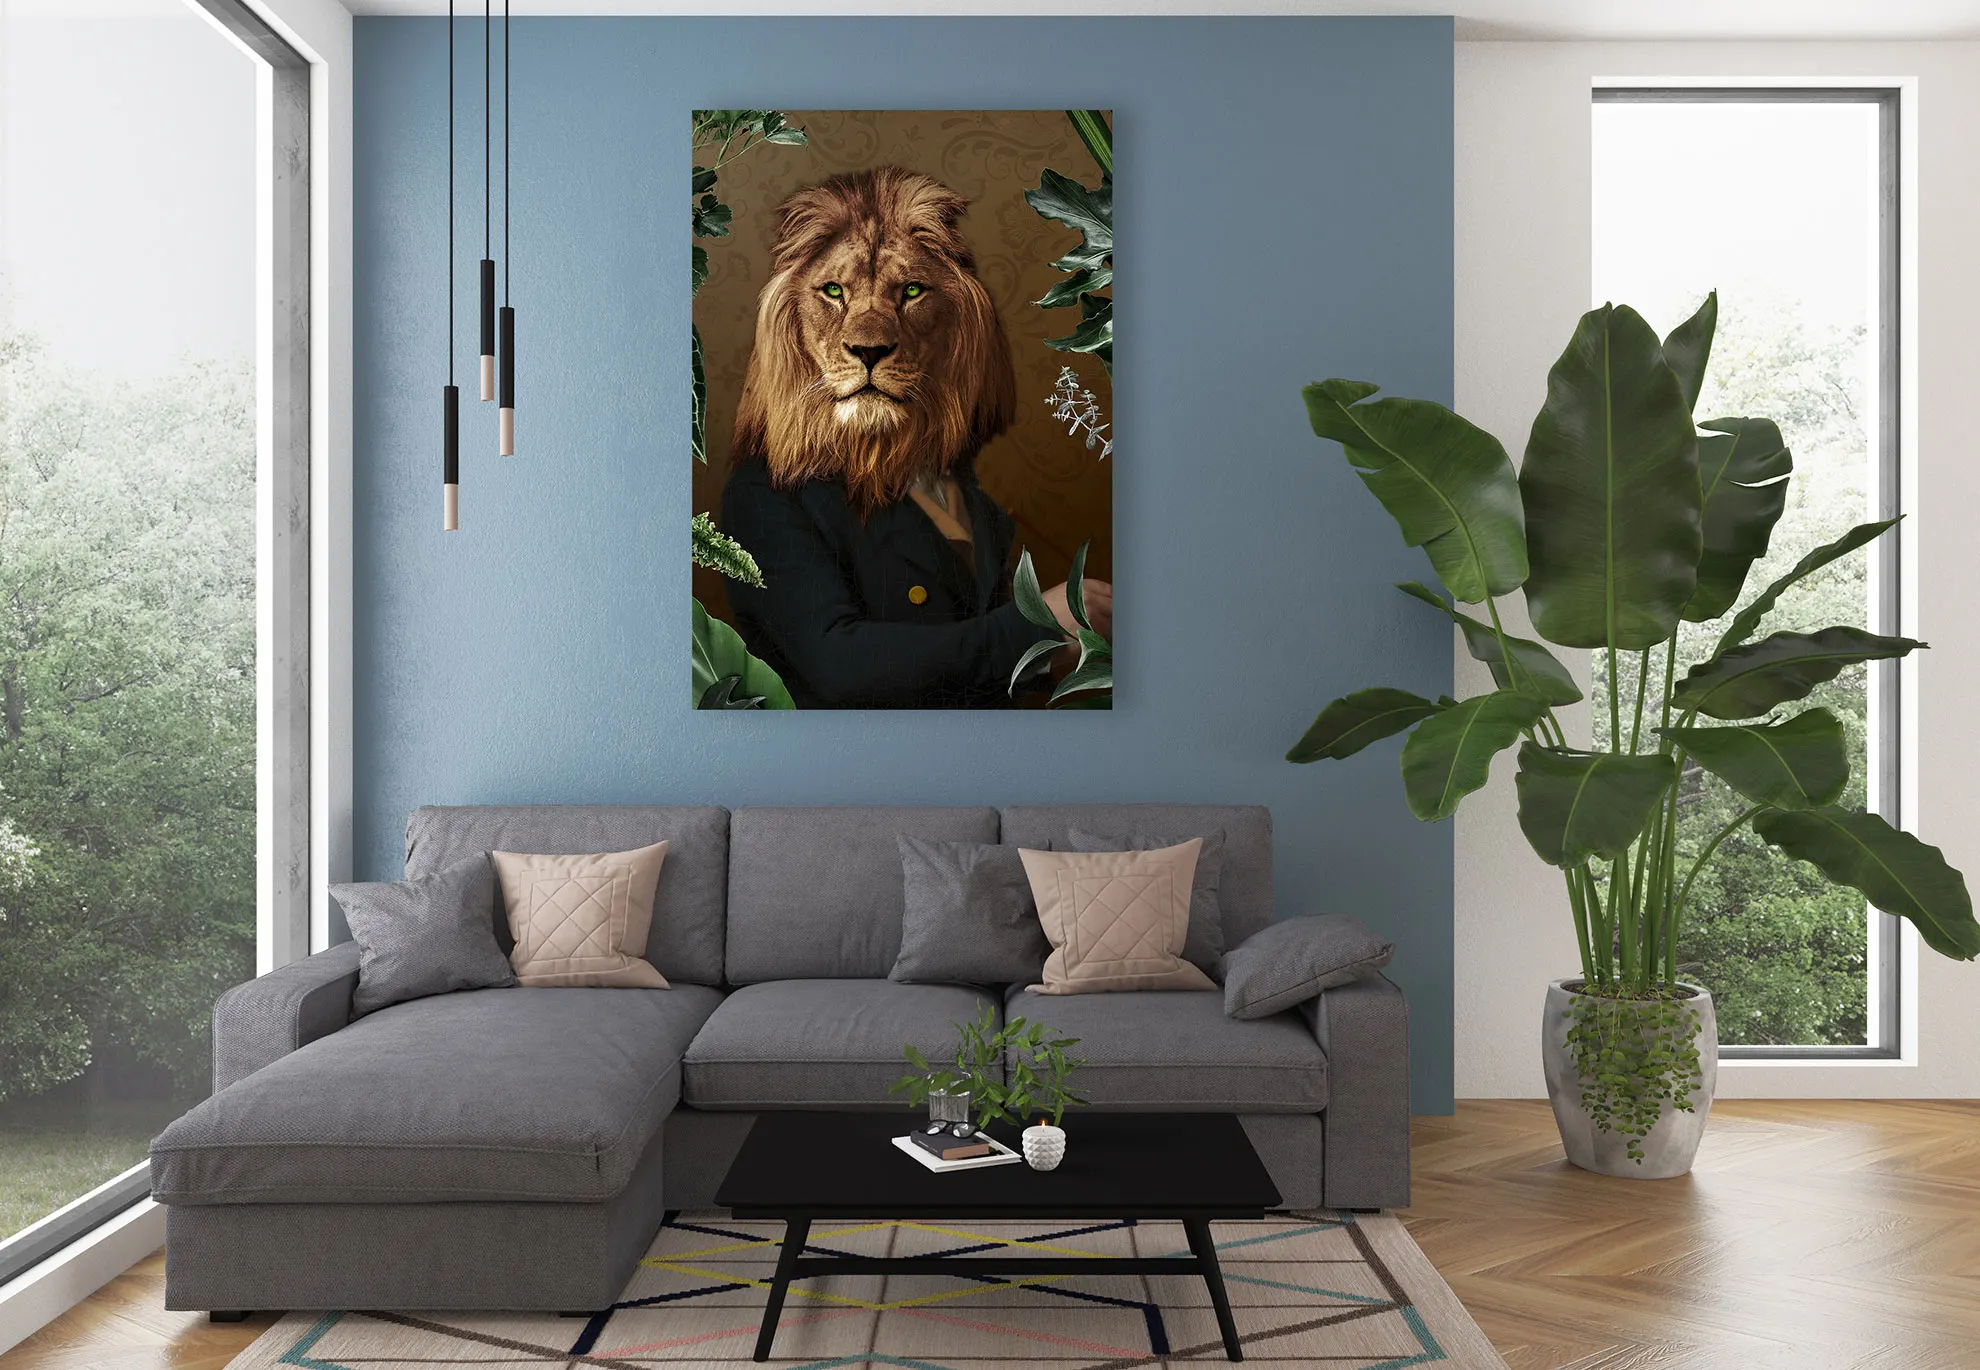 Sir Lion - Buy Canvas Wall Art Painting Online Dubai, UAE - e ...